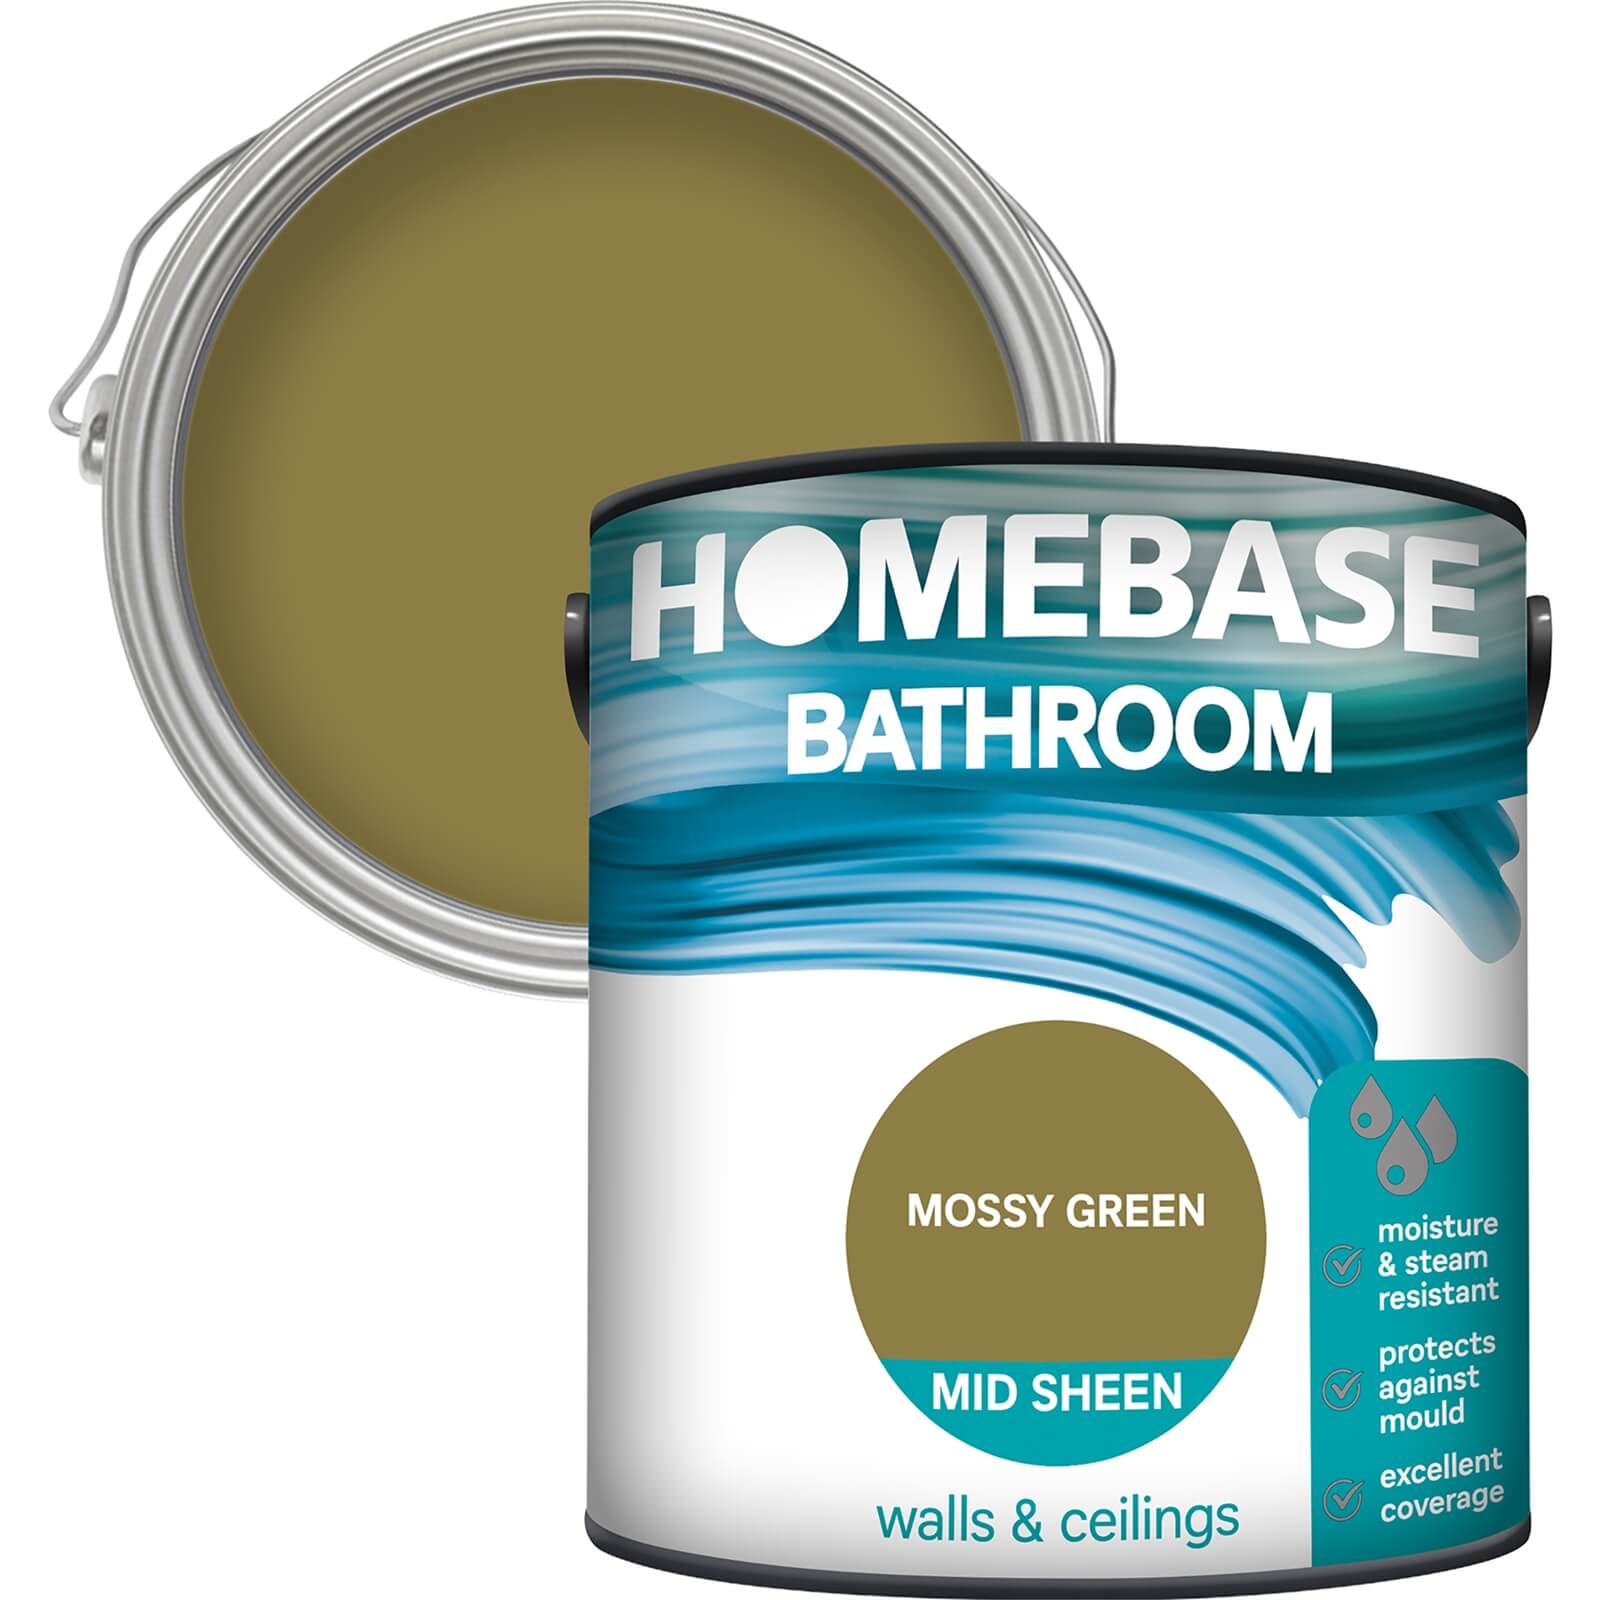 Homebase Bathroom Mid Sheen Paint - Moss Green 2.5L